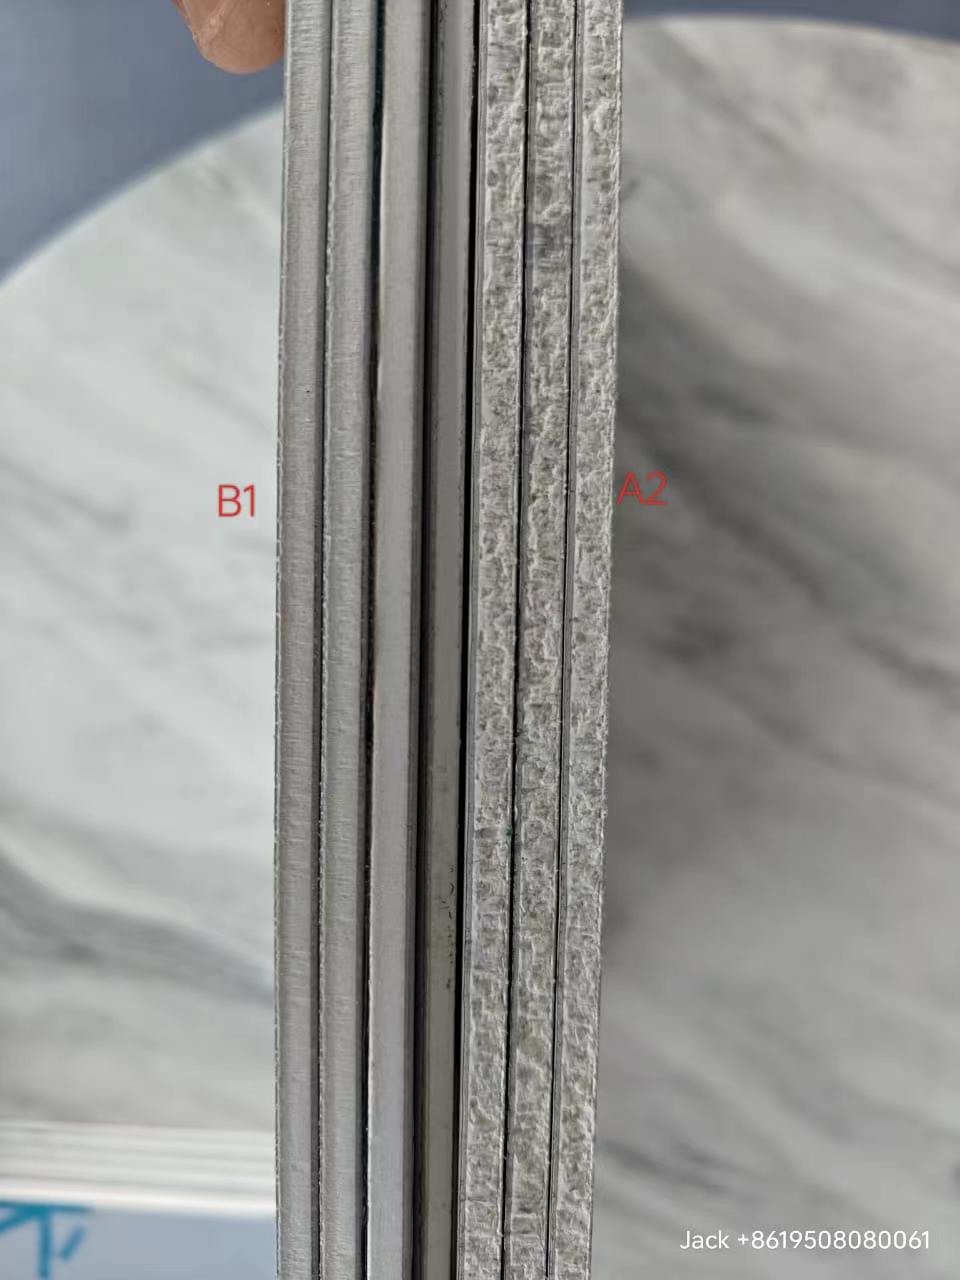 B1 Brandsäker aluminiumkompositpanel Väggpanelbeklädnad